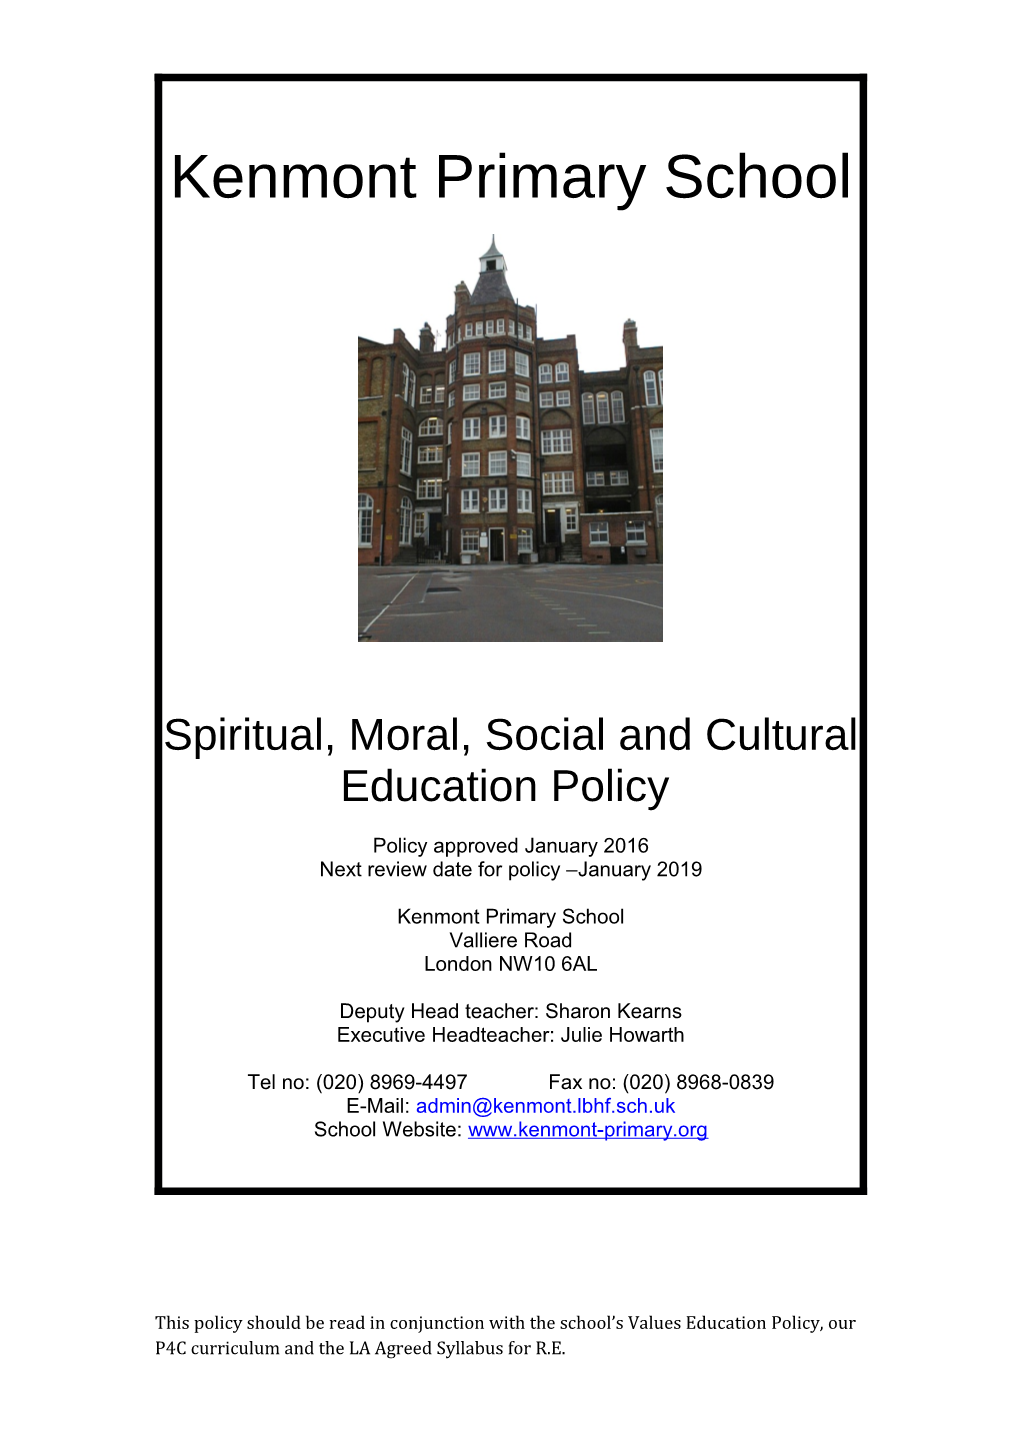 Spiritual, Moral, Social and Cultural Education Policy